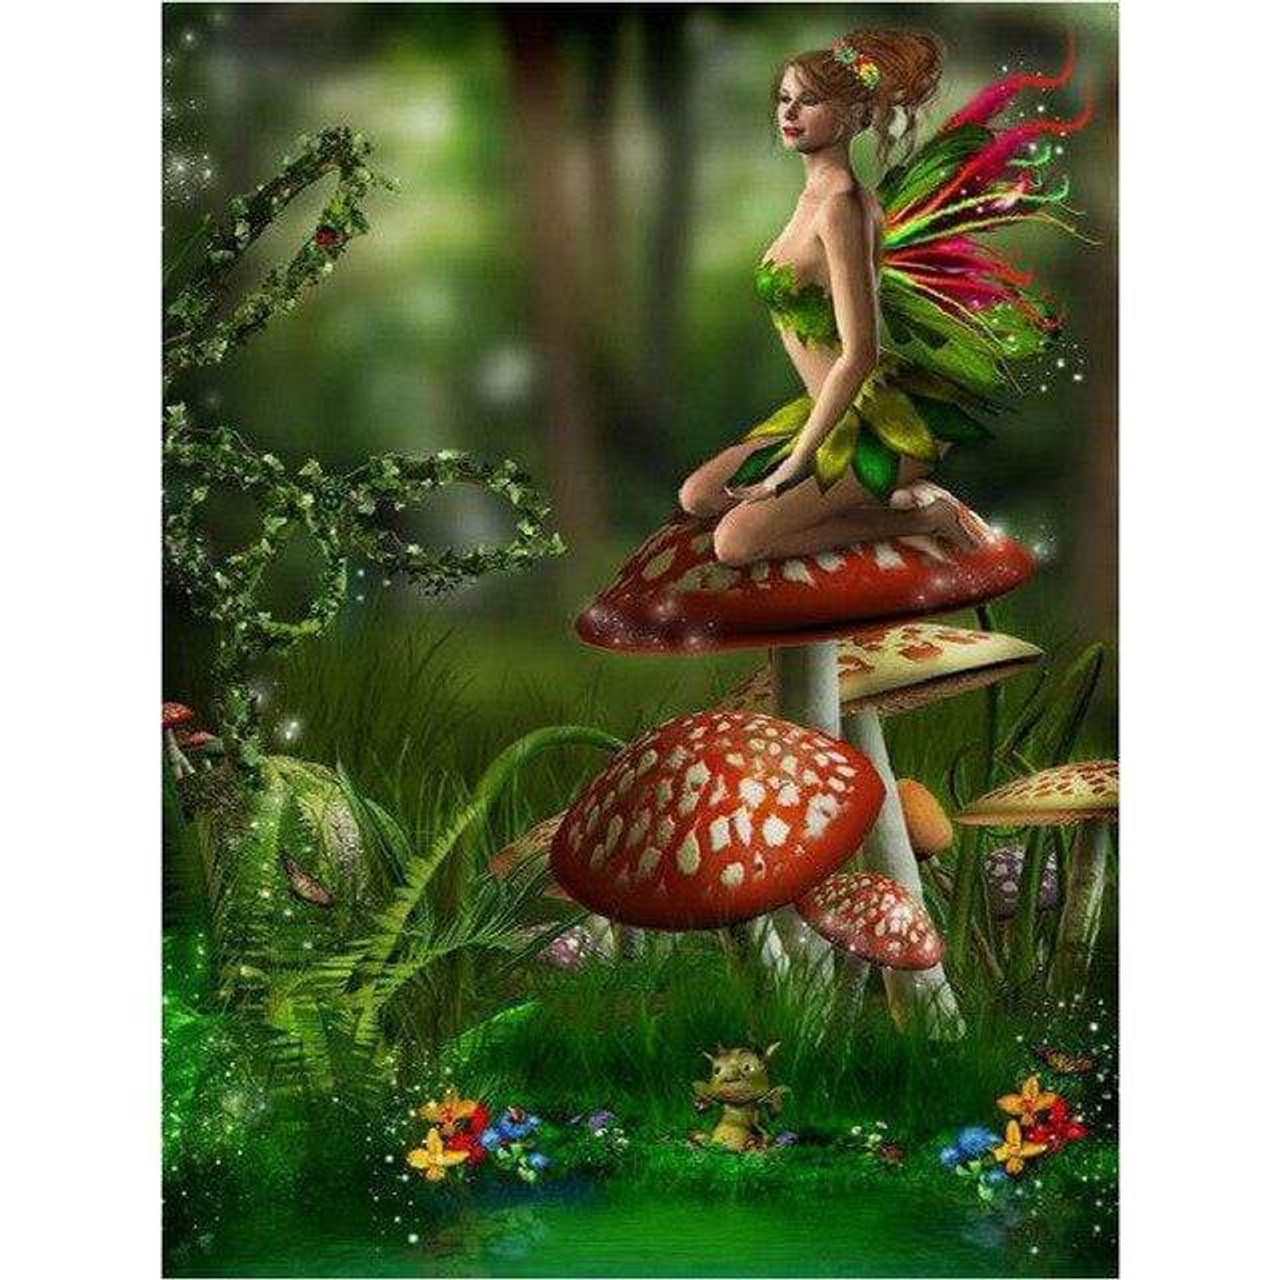 5D Diamond Painting Fairy on a Mushroom Kit - Bonanza Marketplace